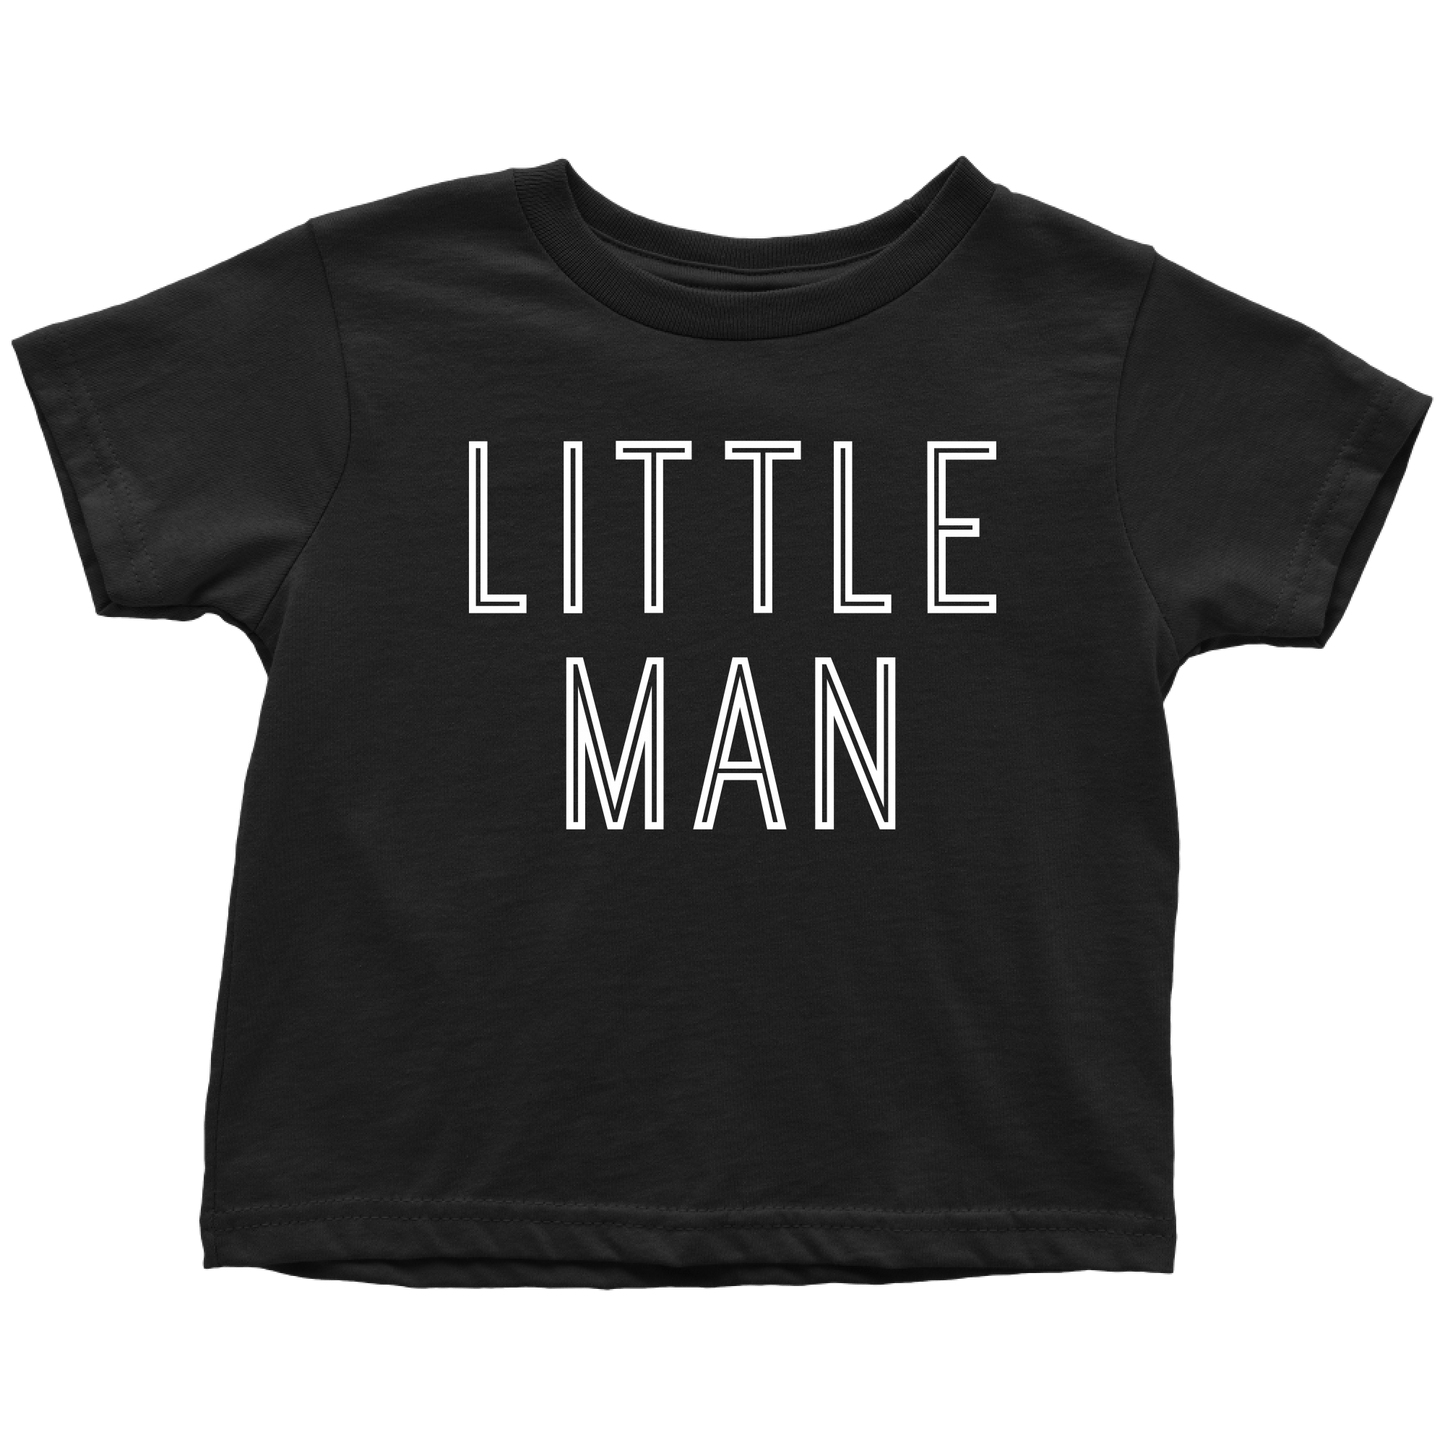 Mama & Litte Man - Couple Shirt